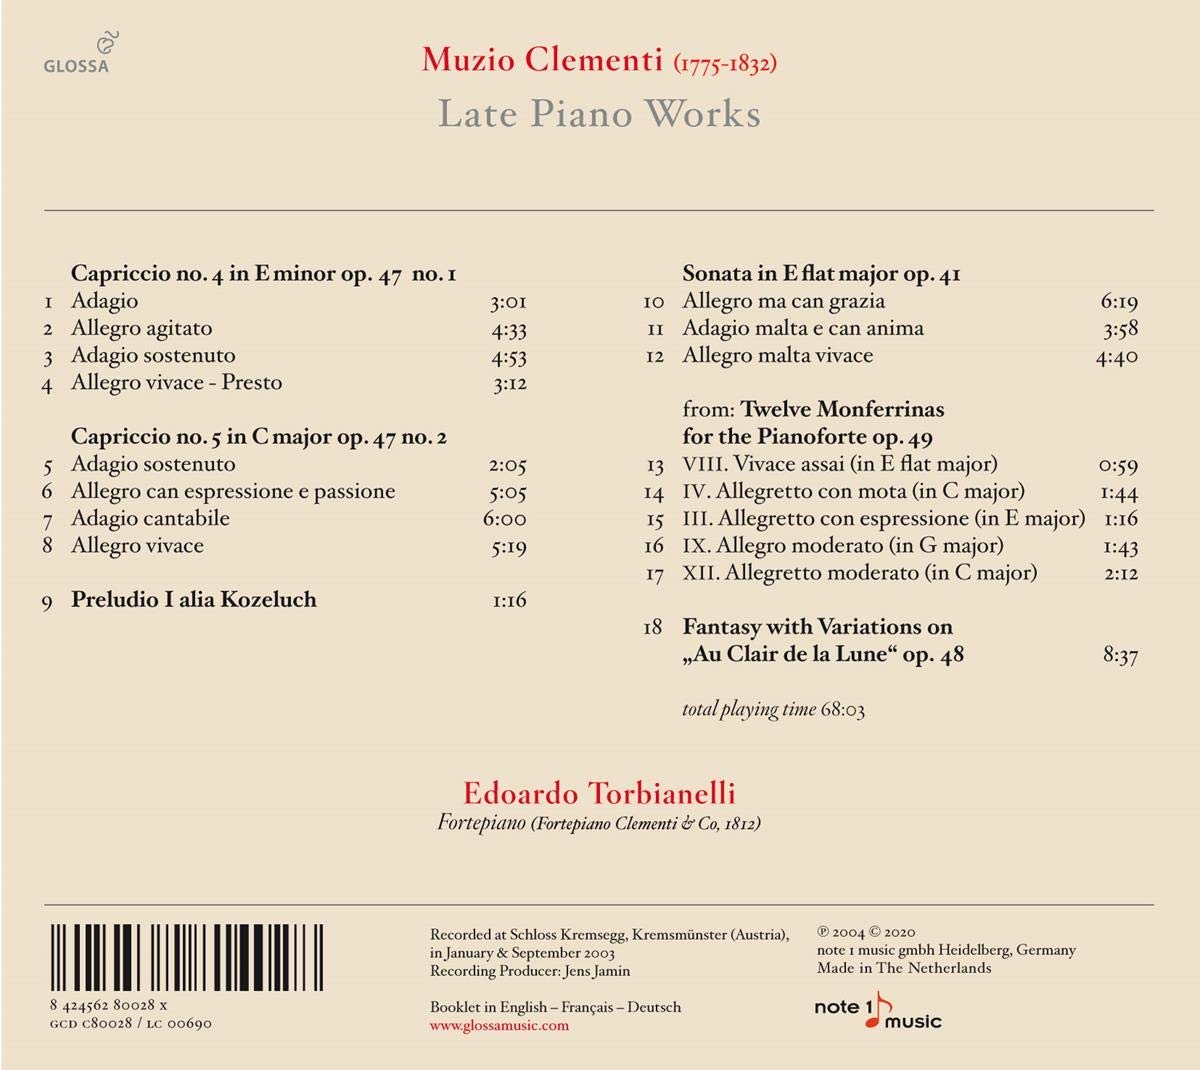 Edoardo Torbianelli 클레멘티: 후기 피아노 작품집 (Muzio Clementi: Late Piano Works) 